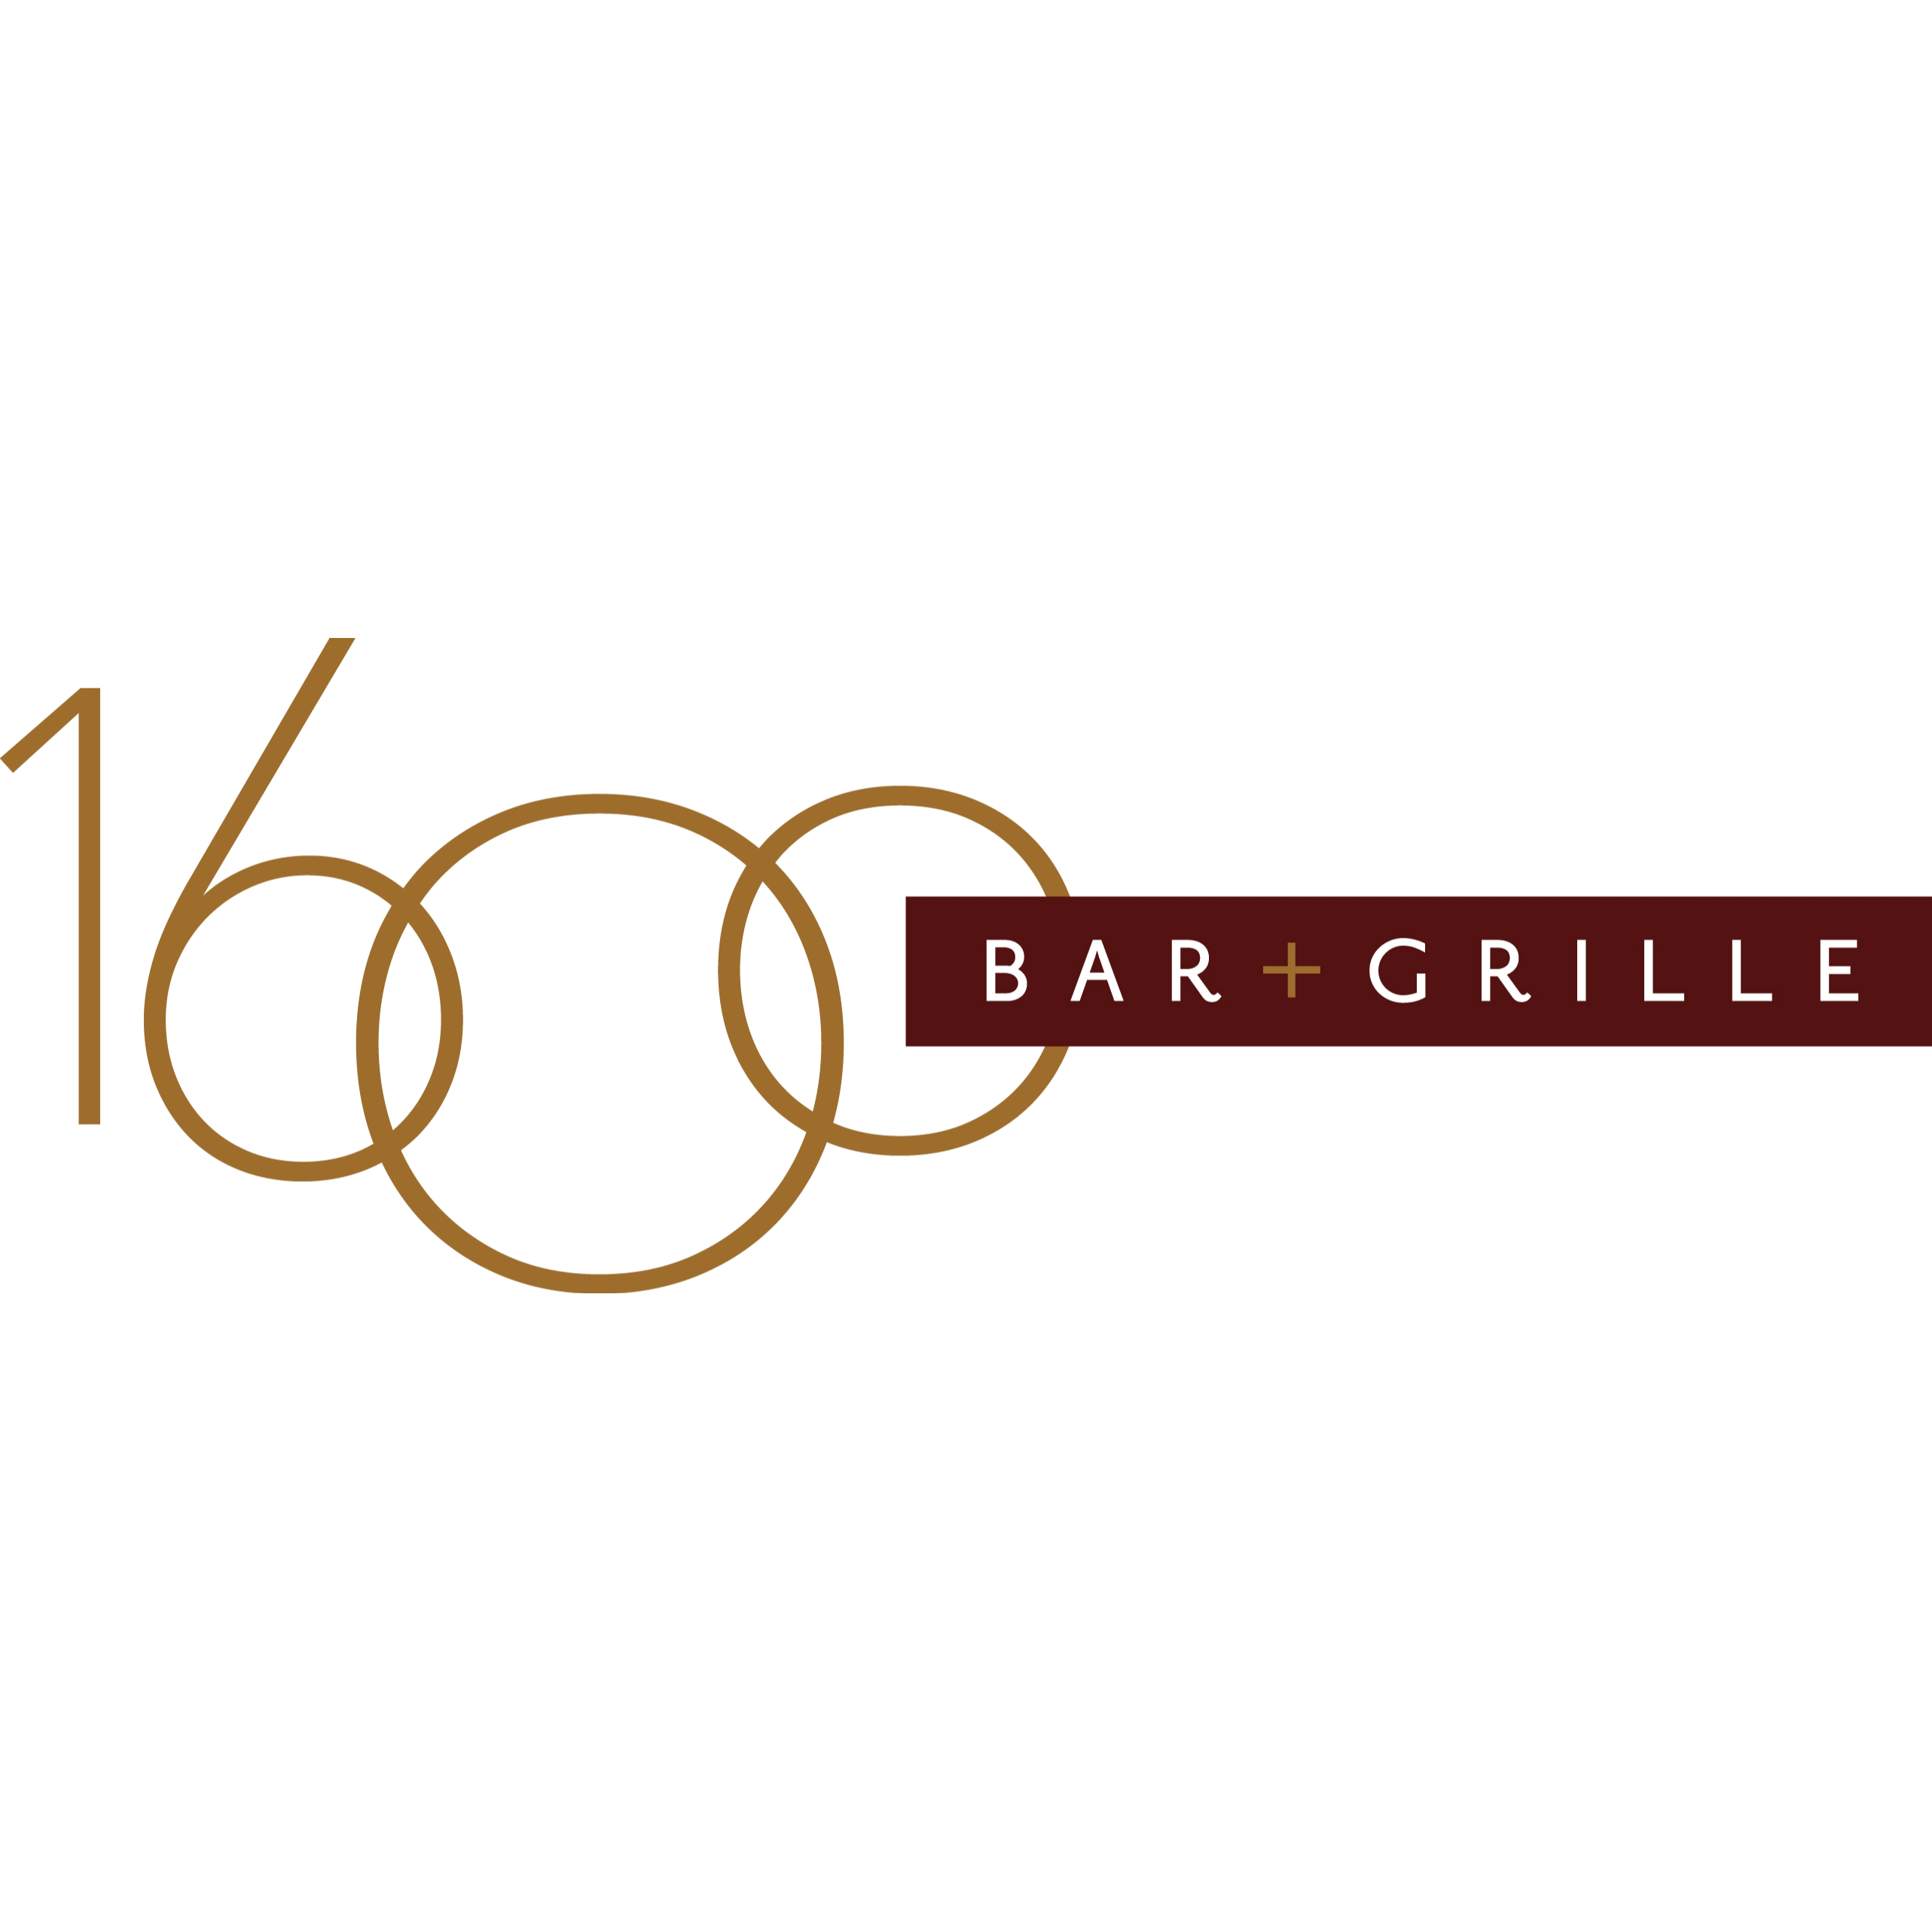 1600 Bar + Grille